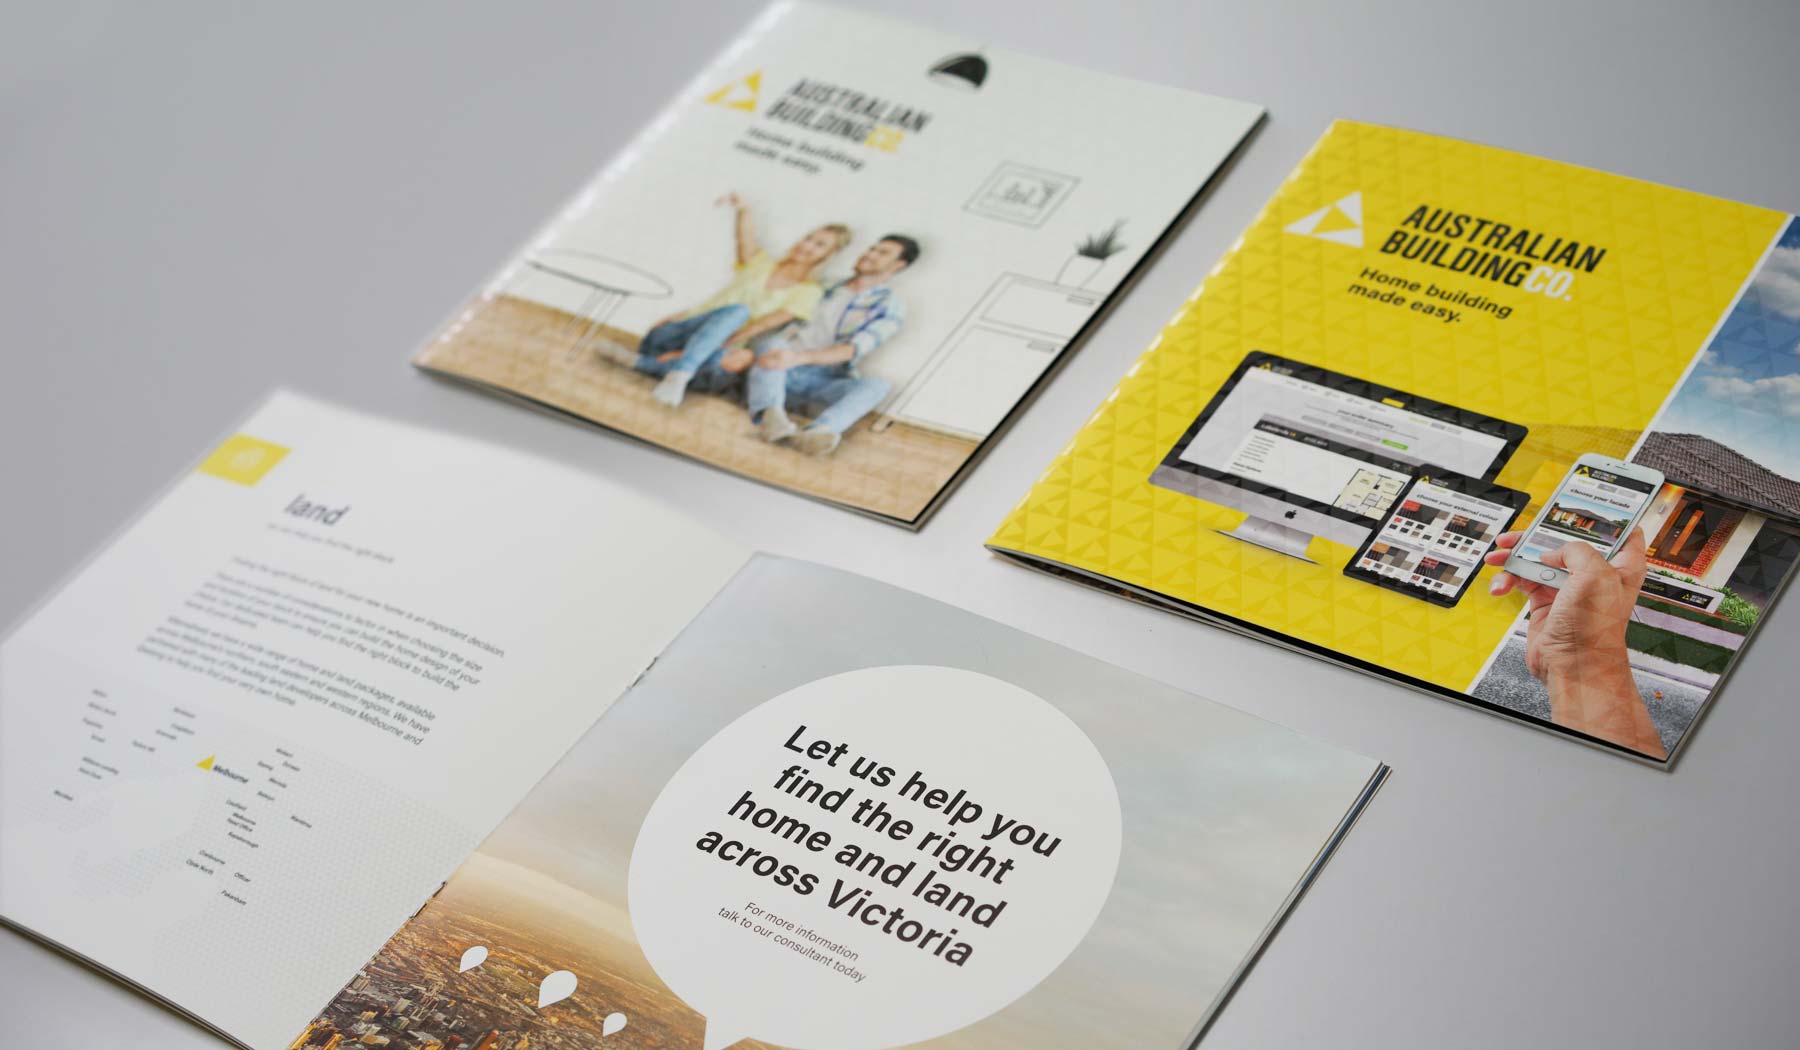 Australian Building Company - Brand brochure: epitomises the brand principles - simple & transparent.